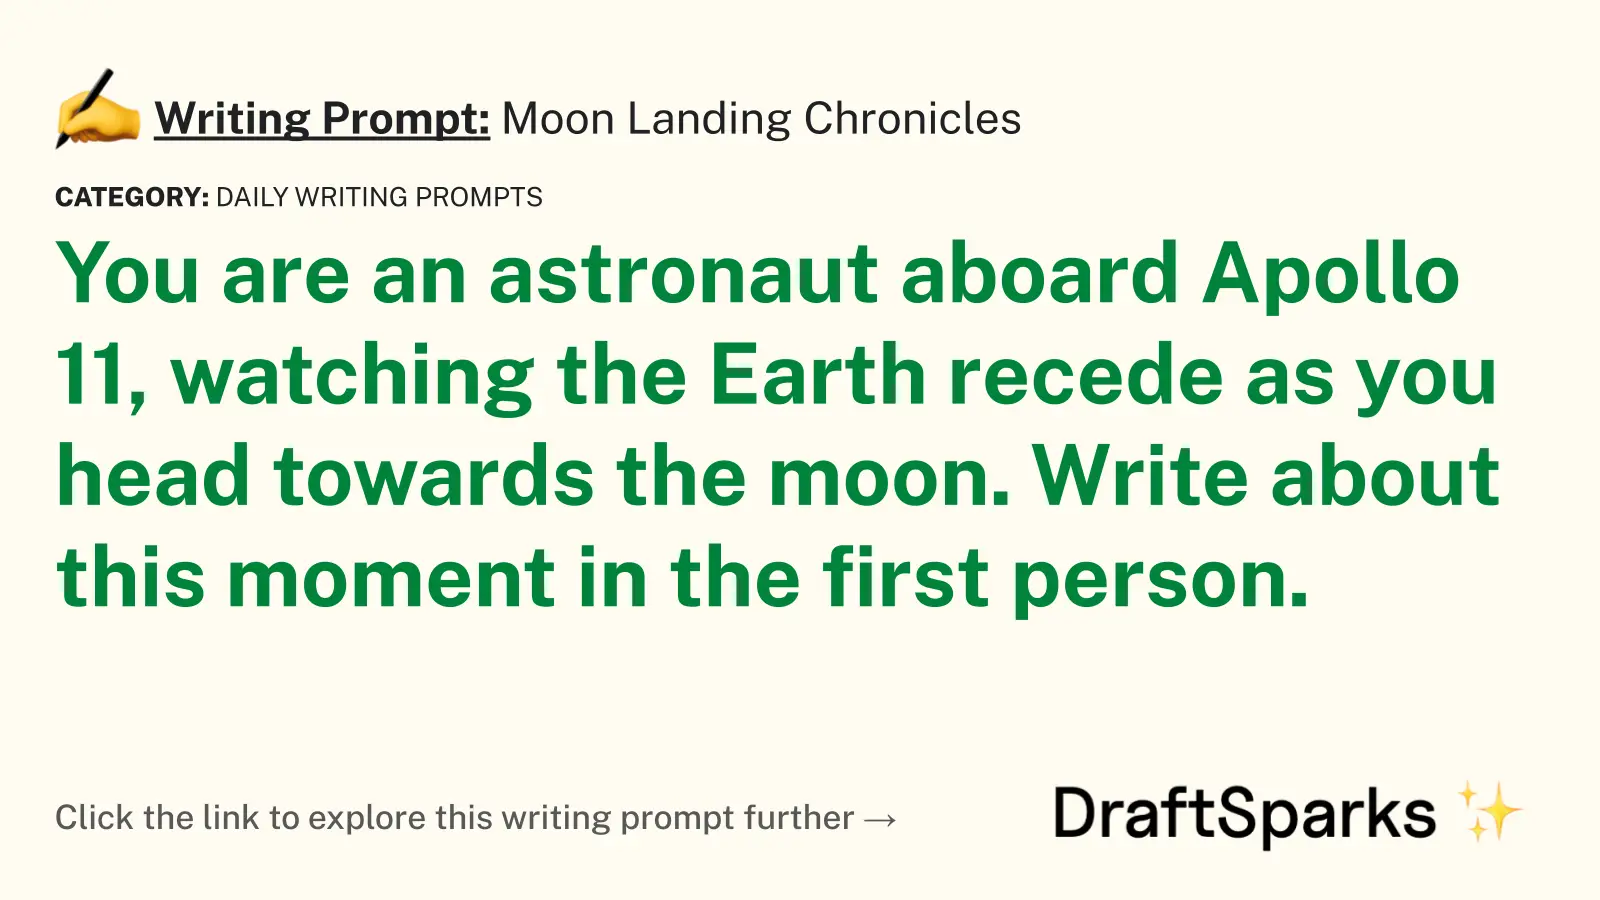 Moon Landing Chronicles